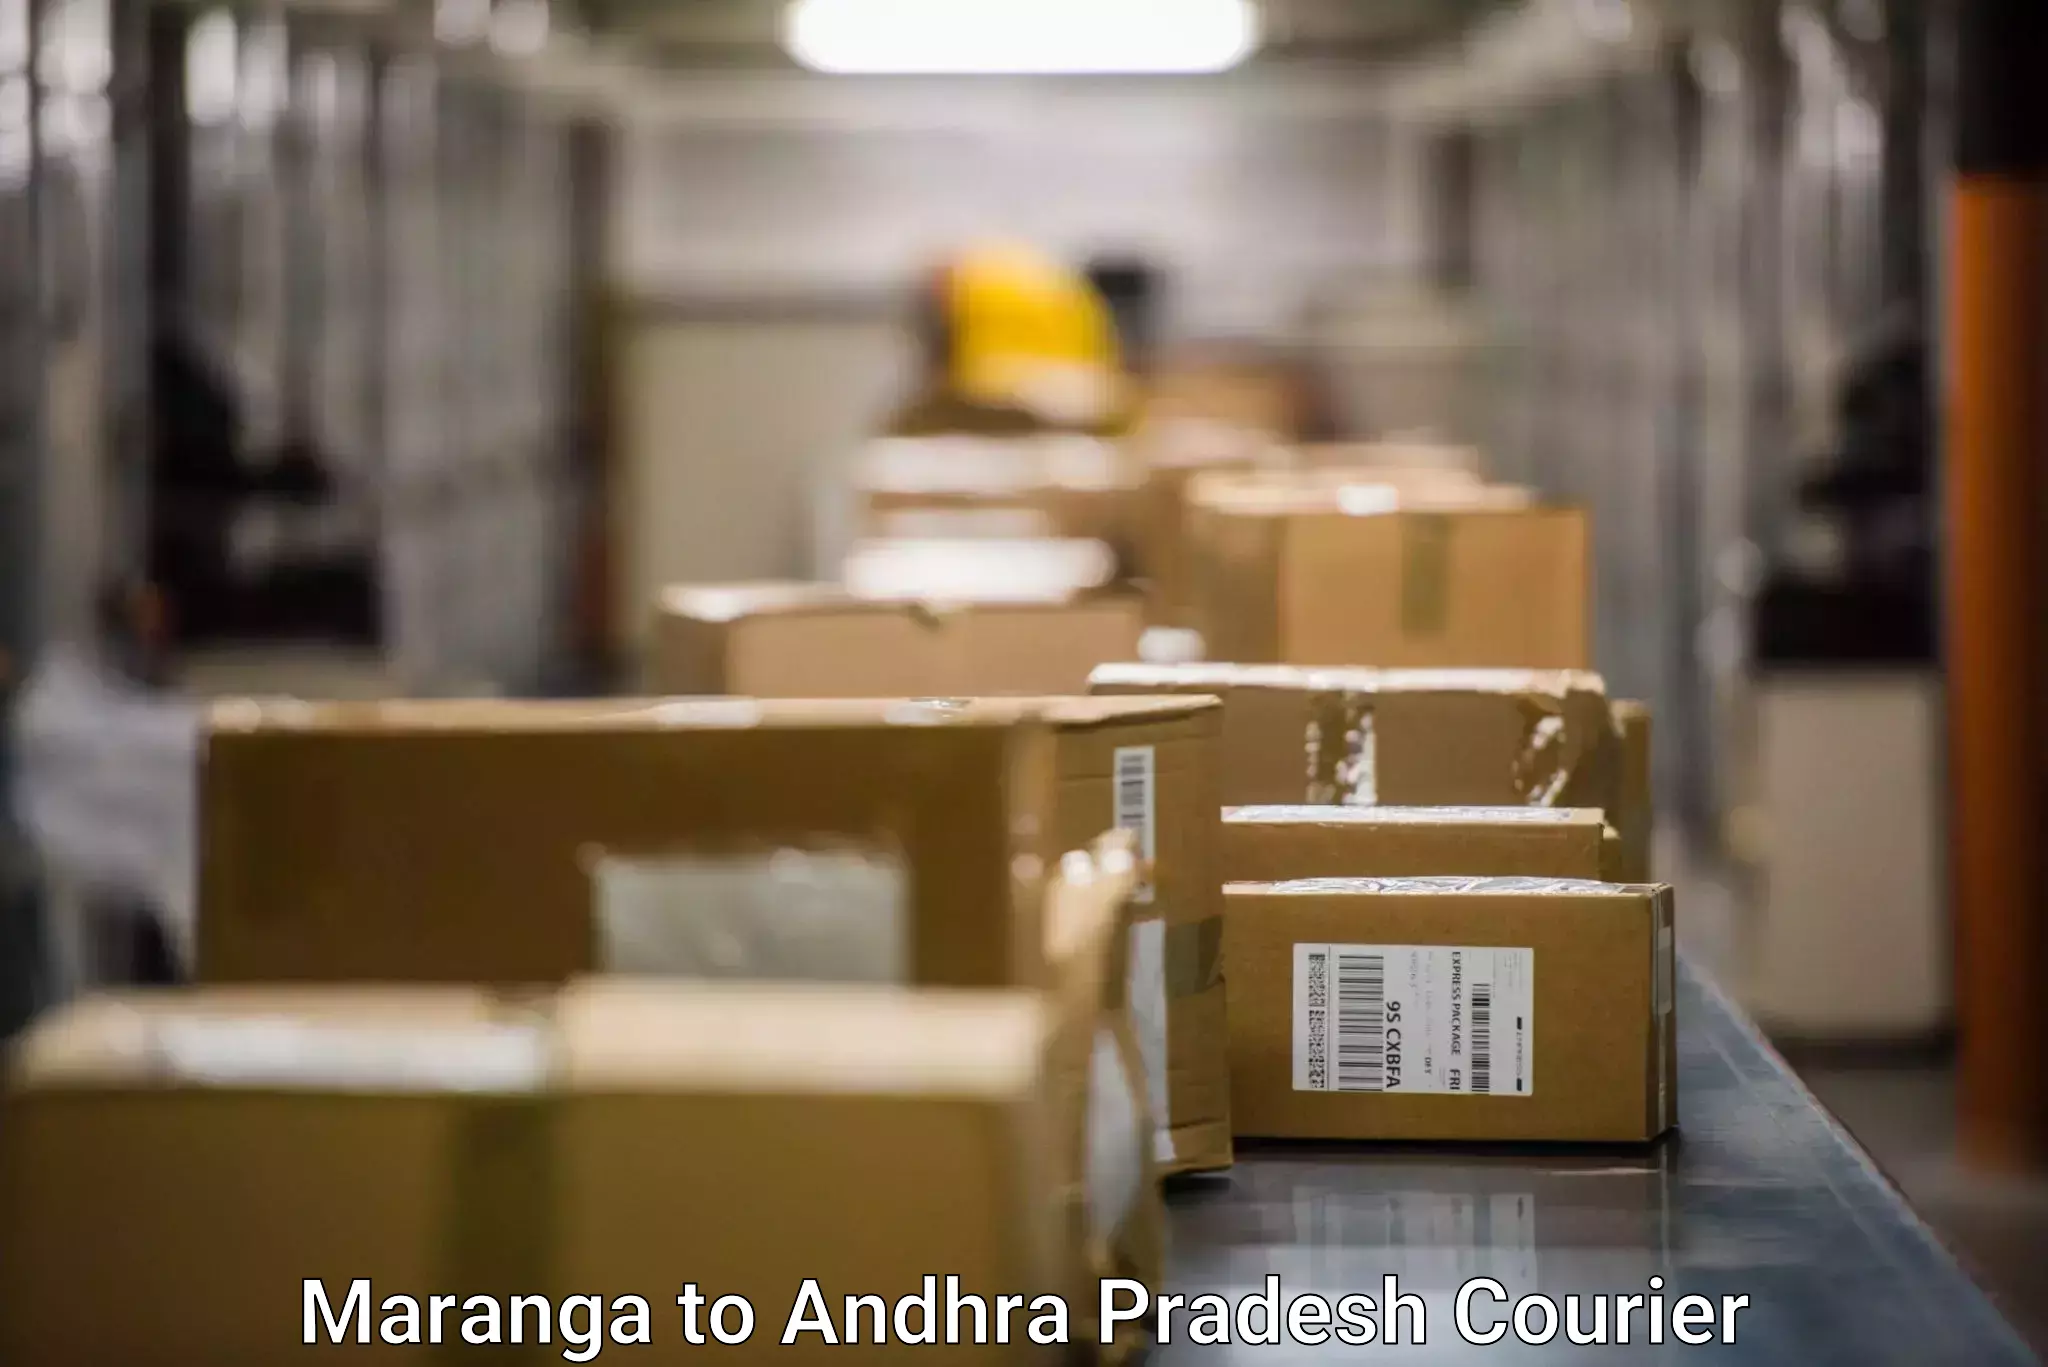 Delivery service partnership Maranga to Andhra Pradesh